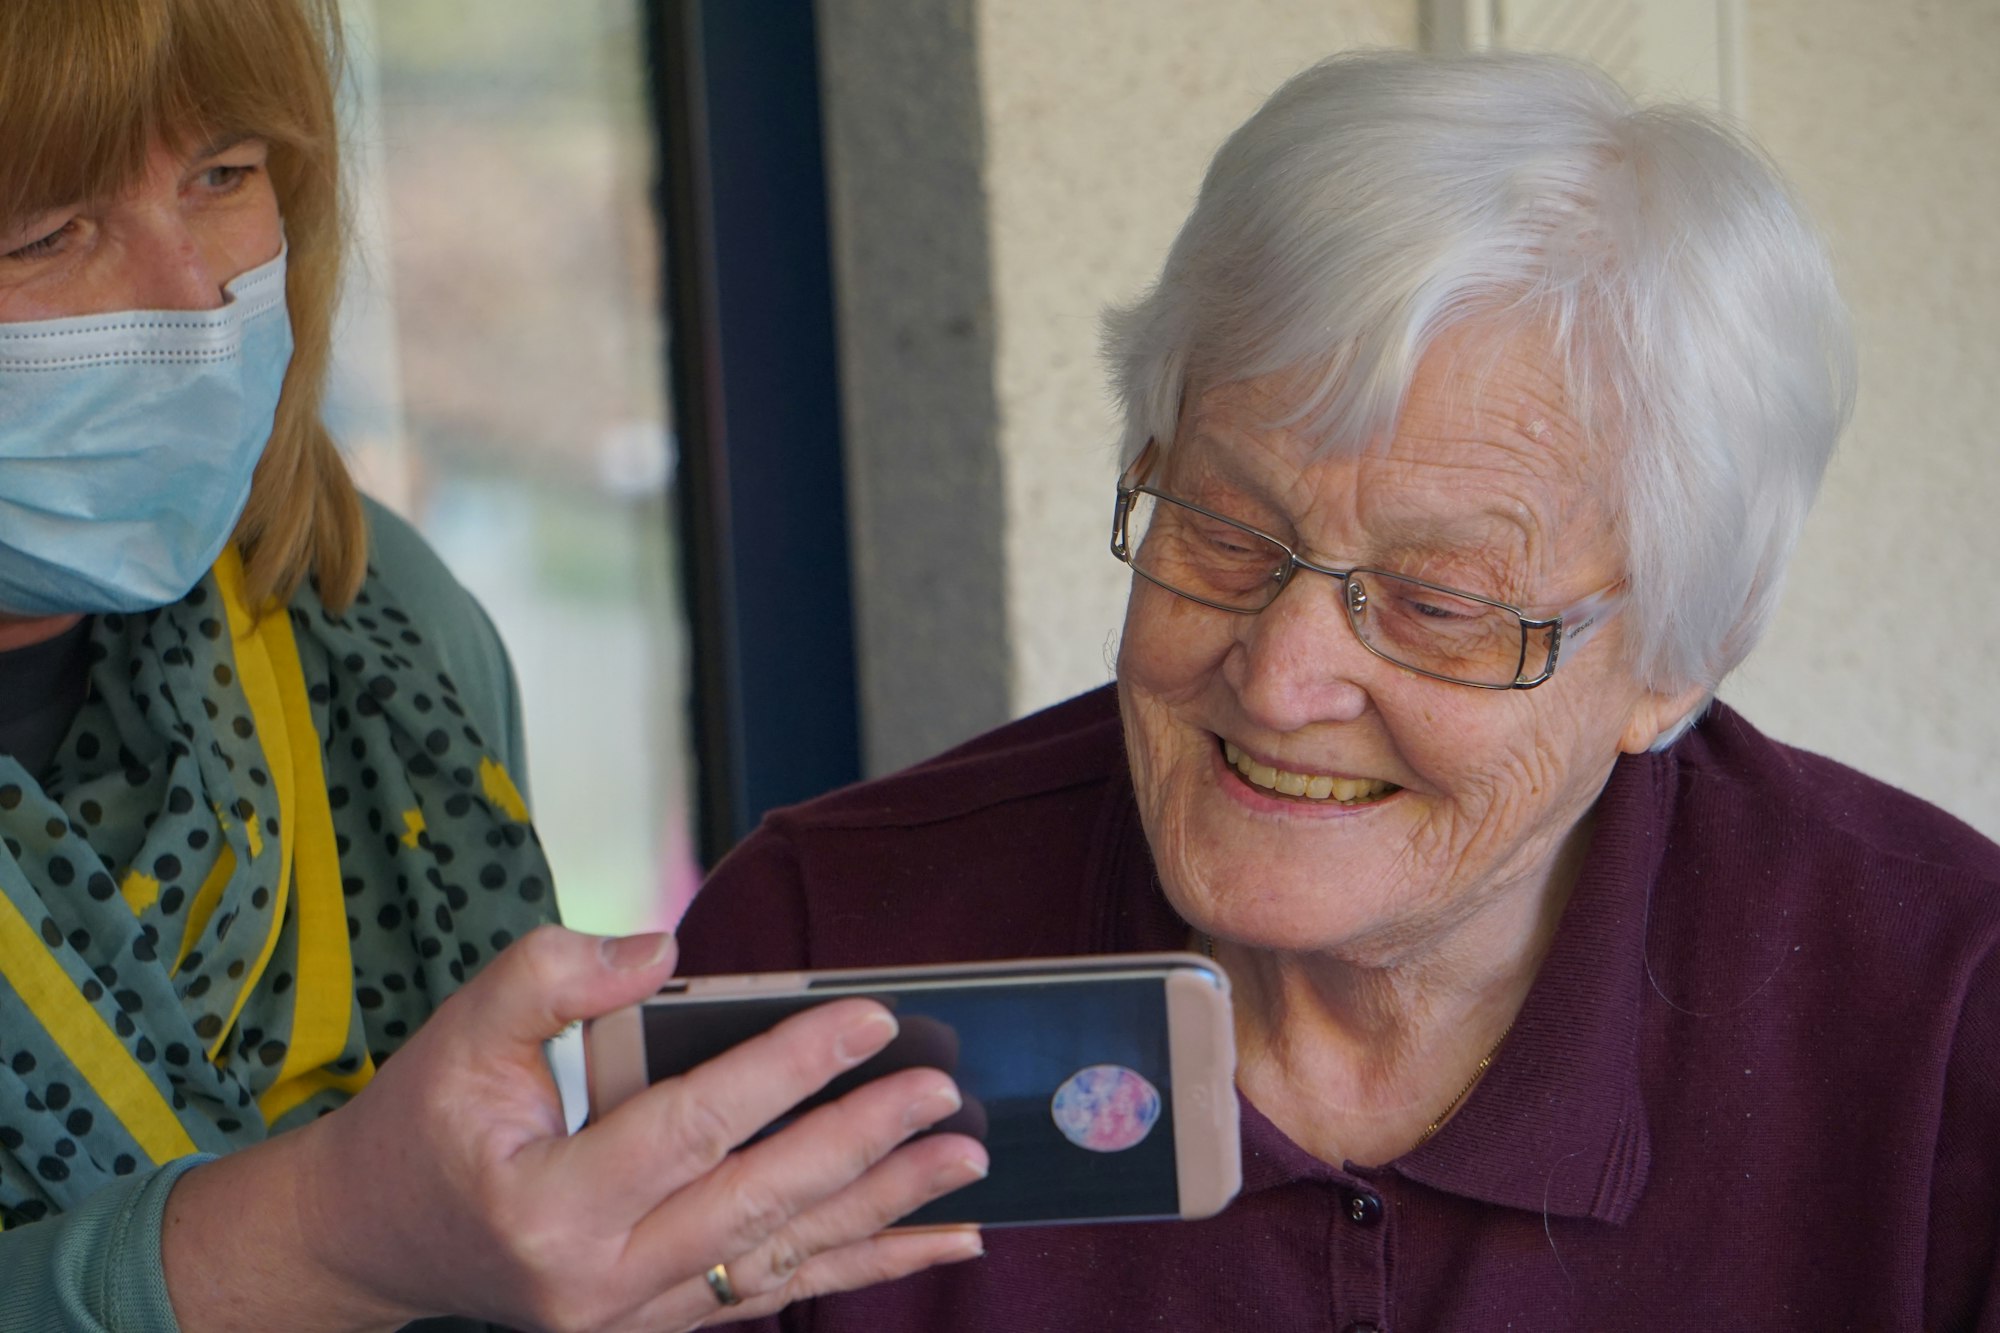 GenWise raises $3.5 million in funding to target the elderly population